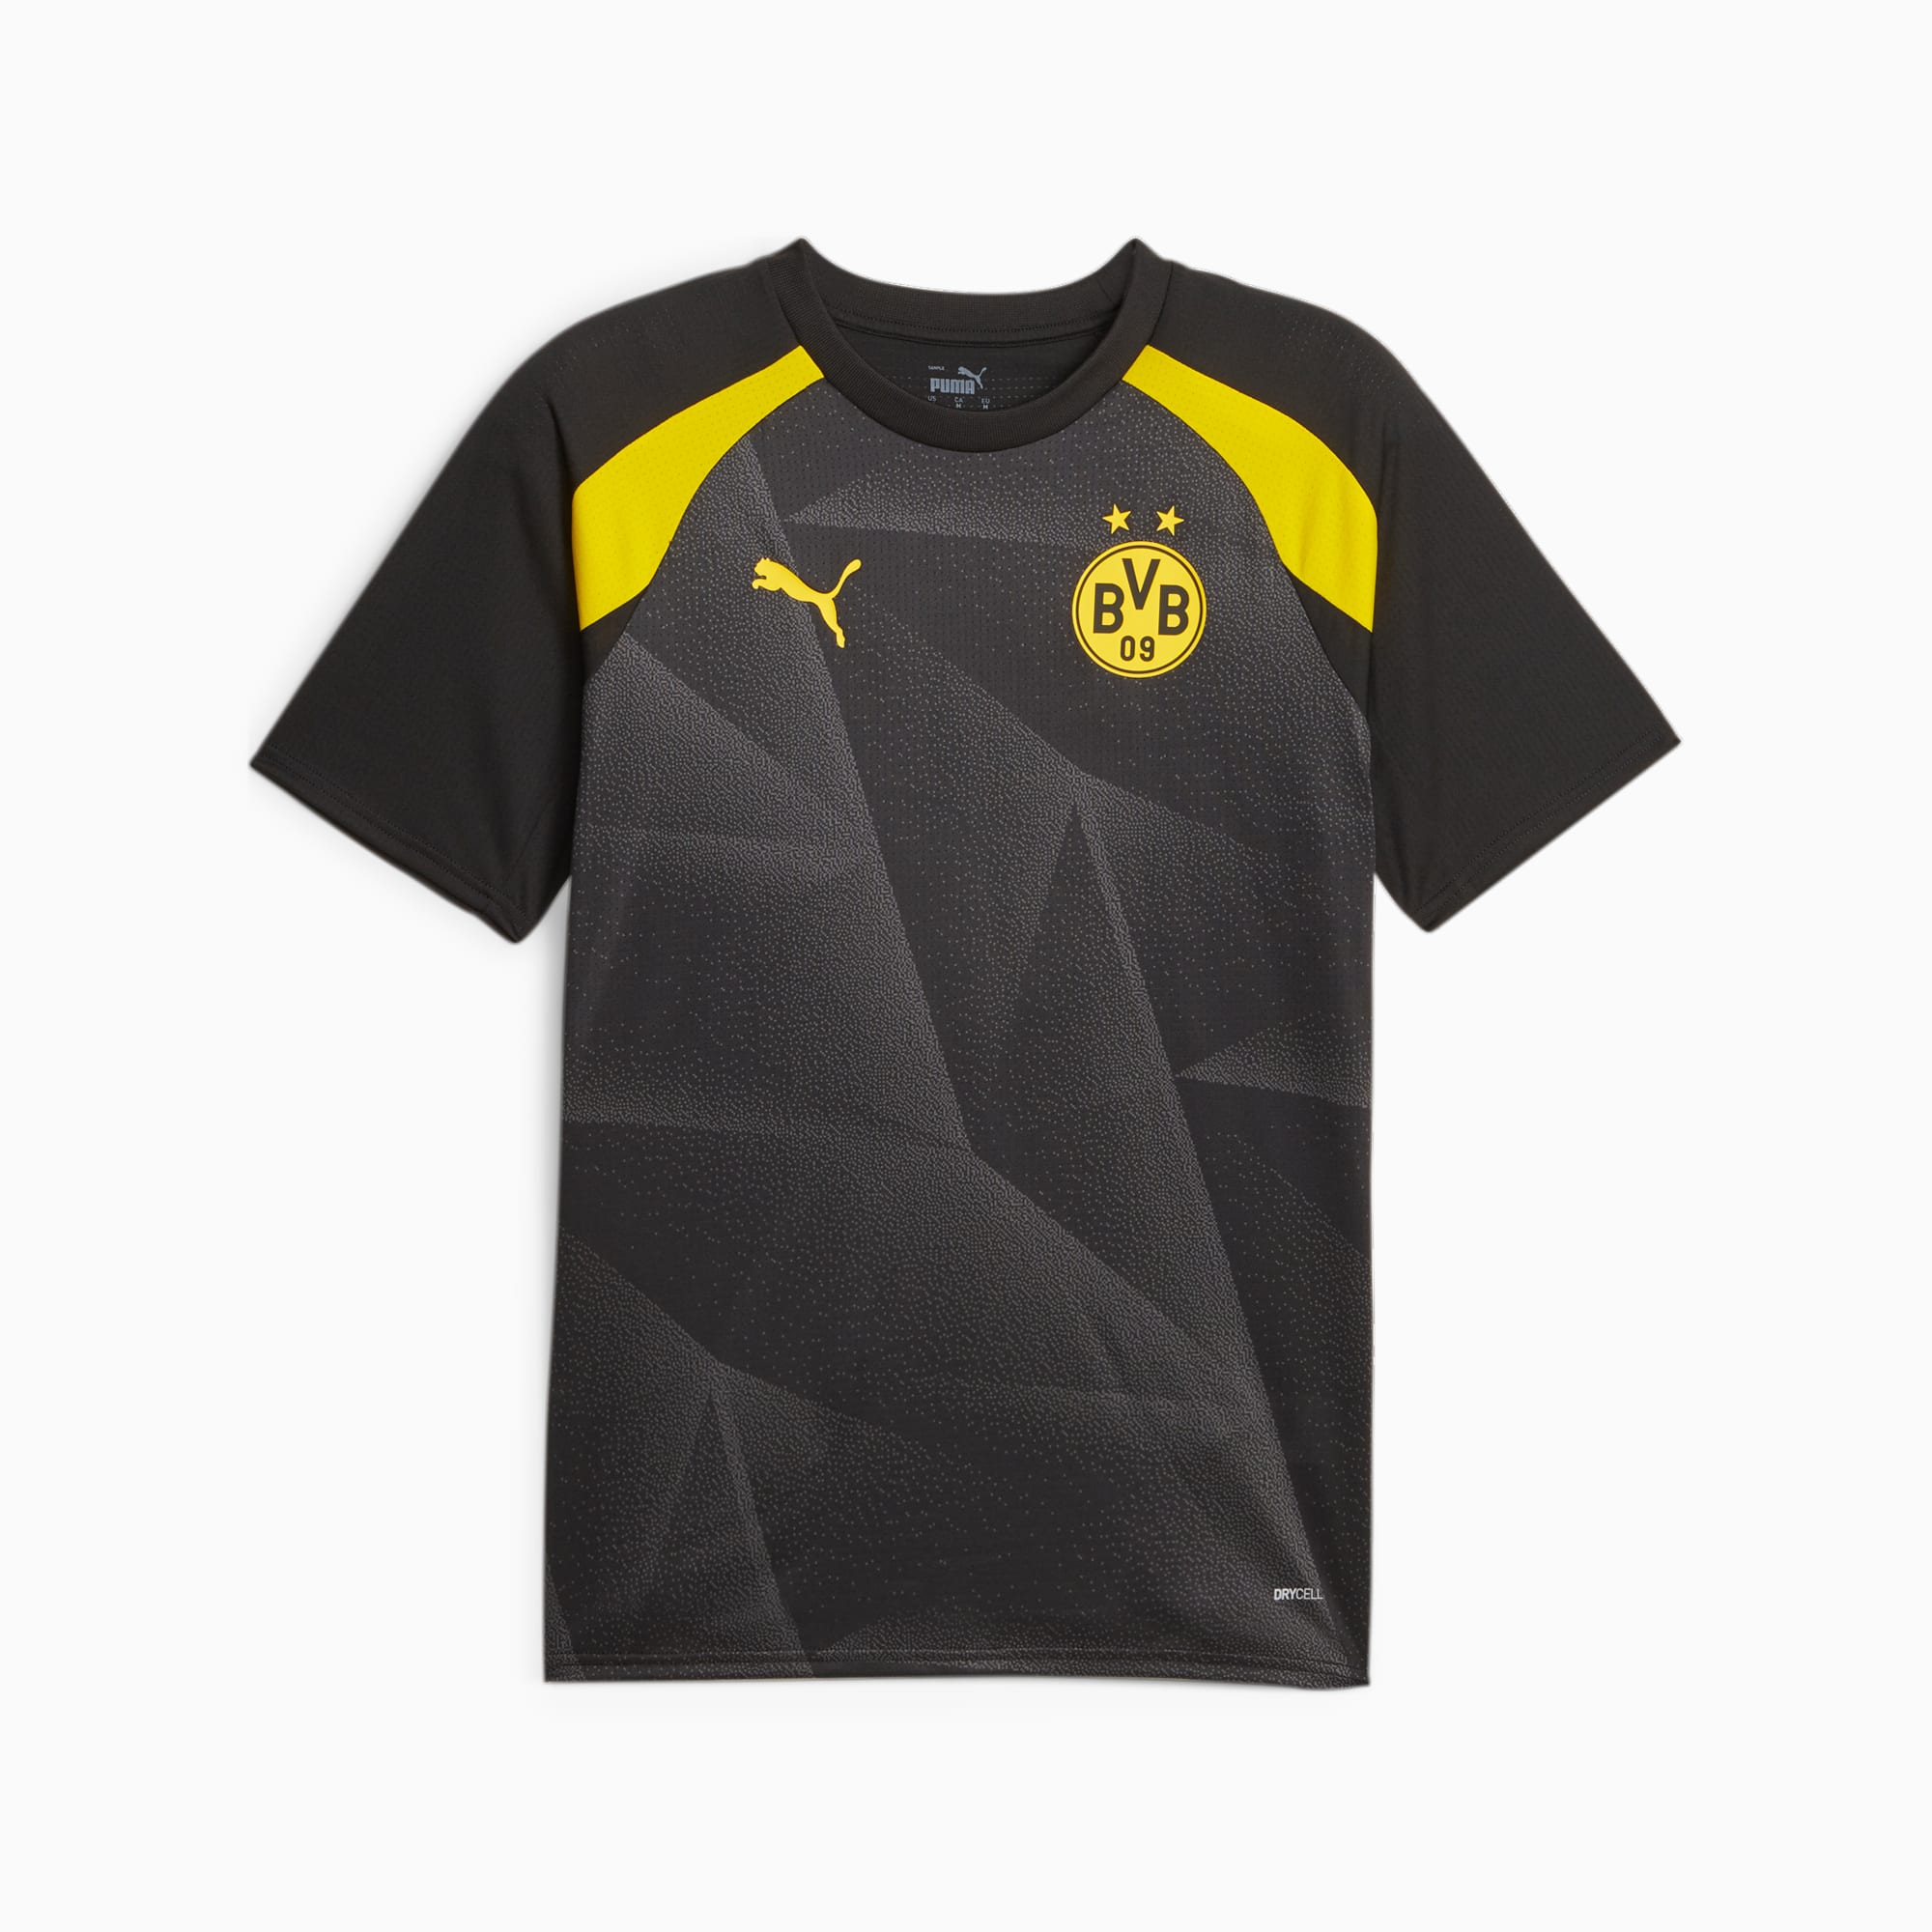 PUMA Borussia Dortmund Men's Prematch Jersey, Black/Cyber Yellow, Size XS, Clothing